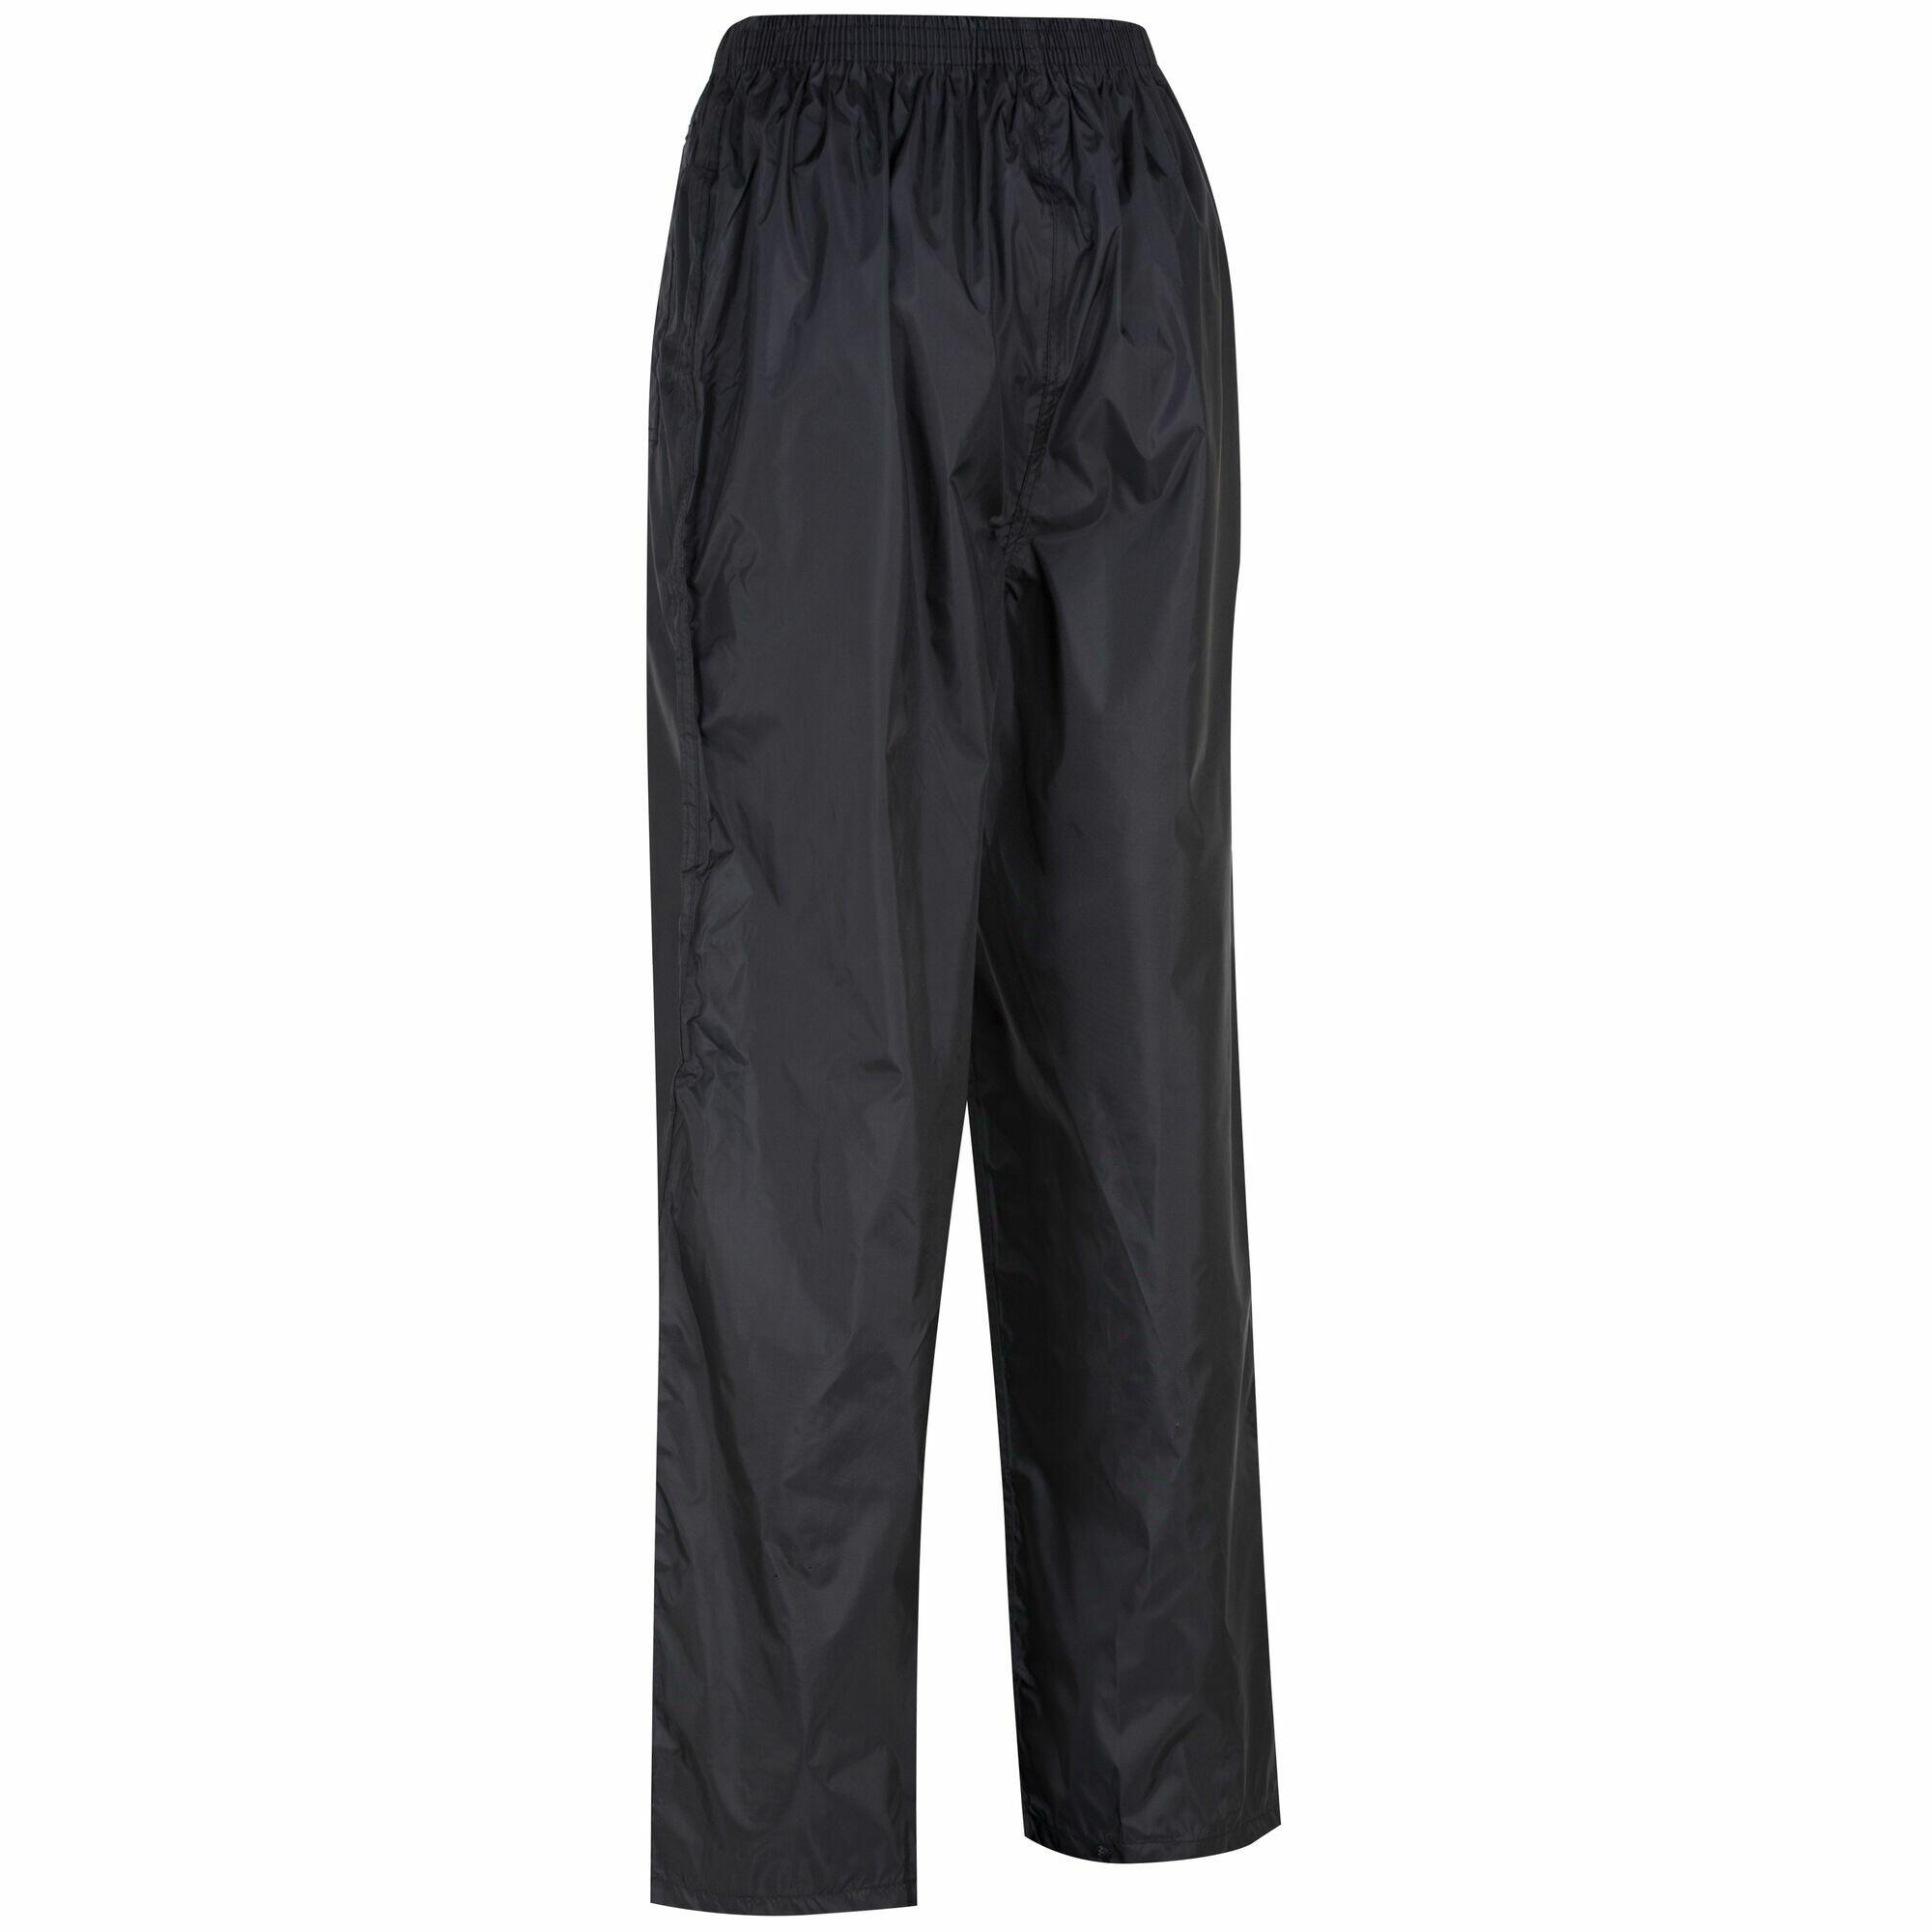 Pack It Women's Hiking Waterproof Overtrousers - Black 6/7